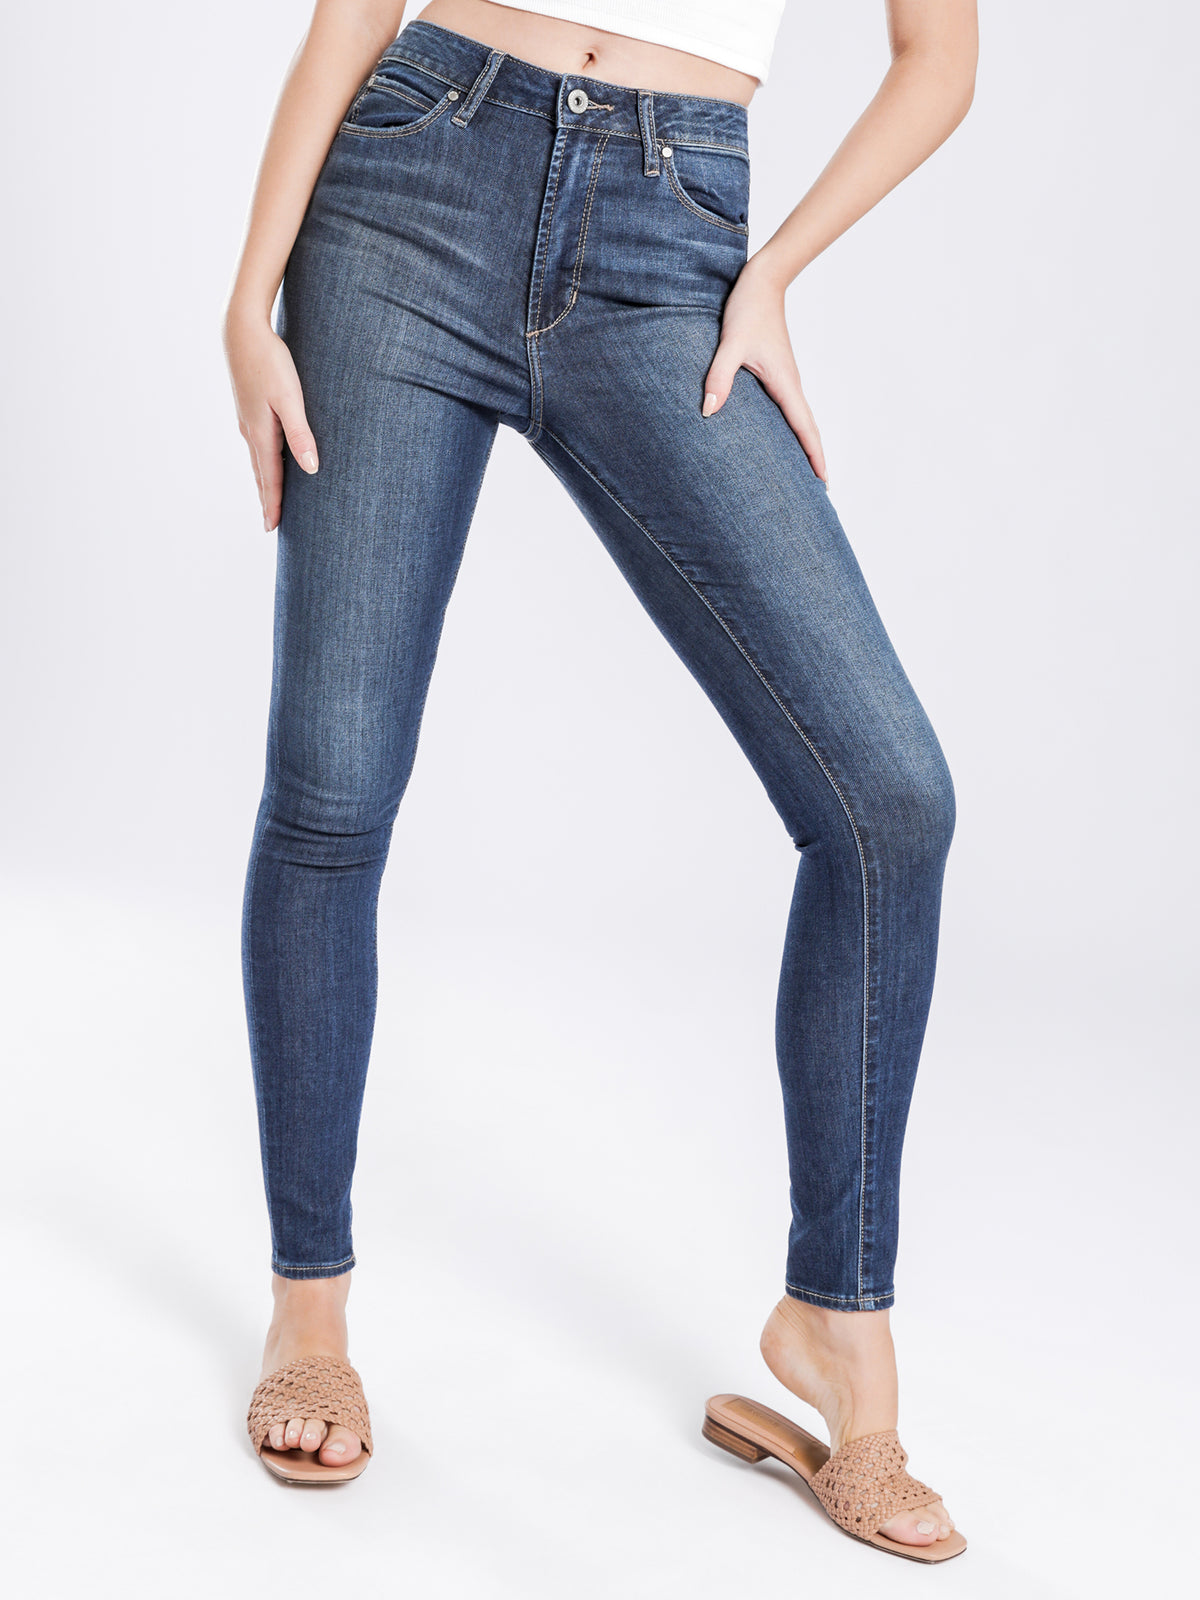 High Sarah Skinny Jeans in Kingston Blue Indigo Denim